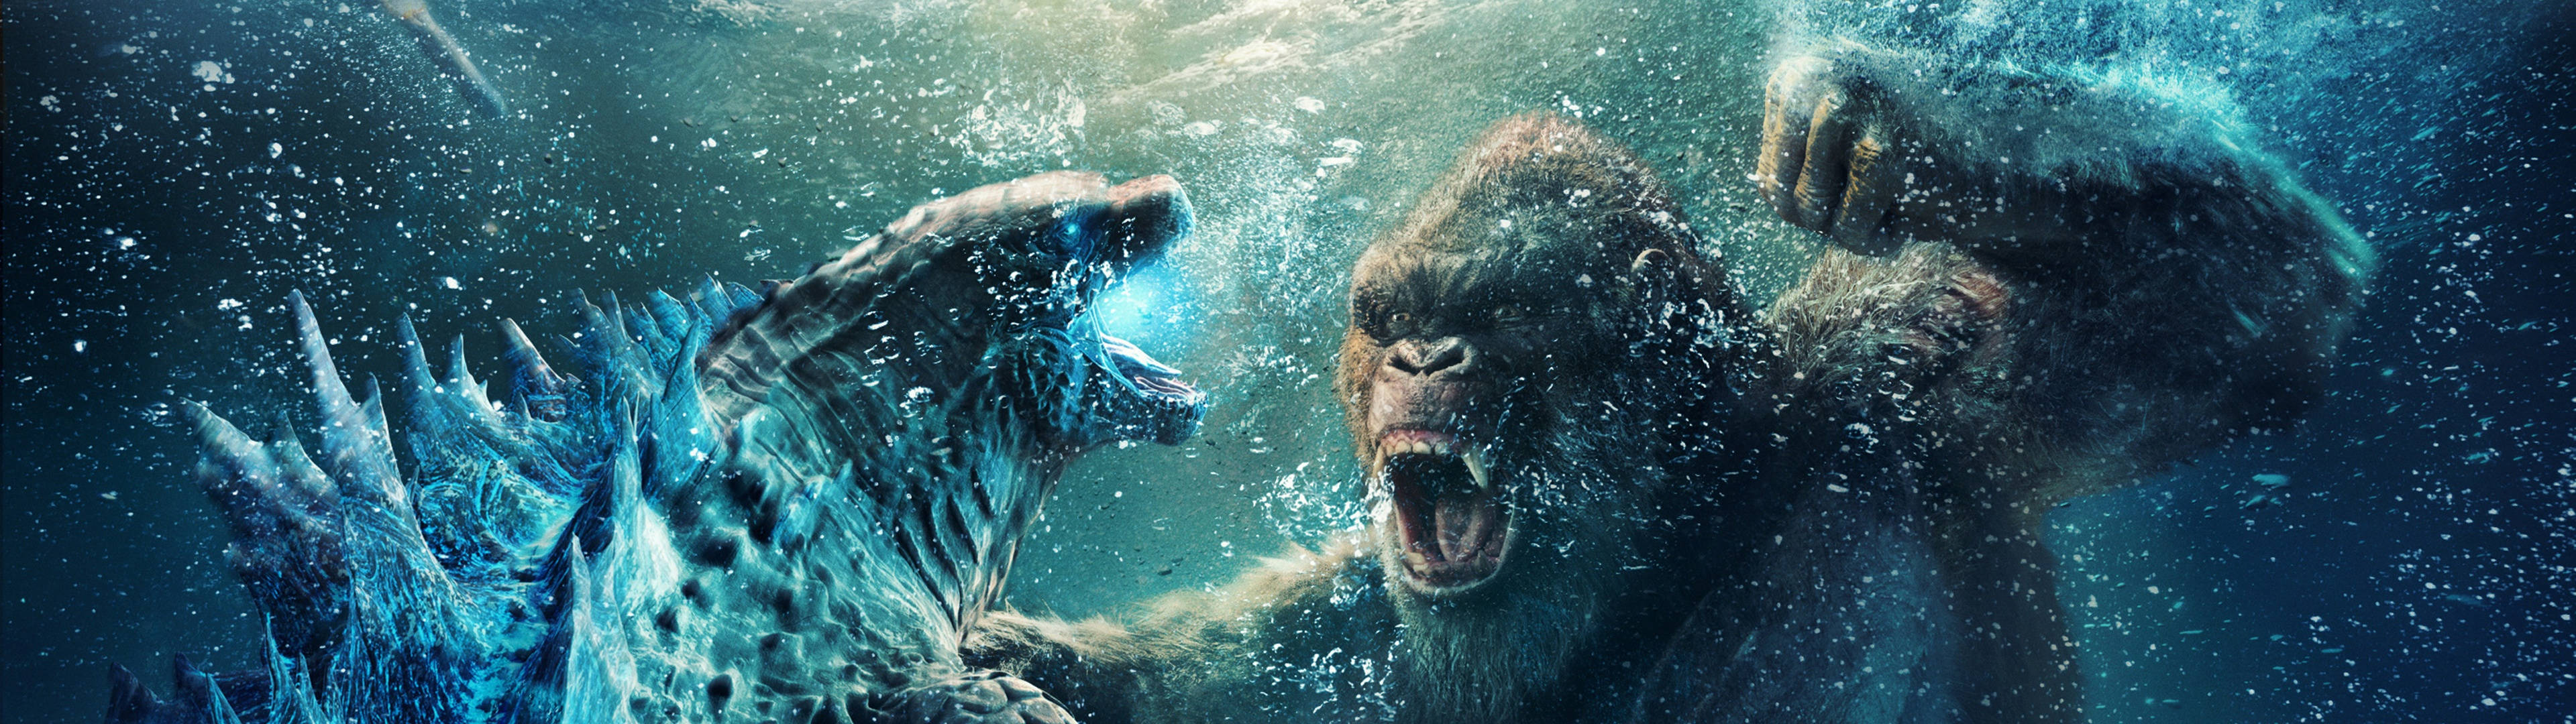 Godzilla Mot King Kong - Hd 720p Wallpaper